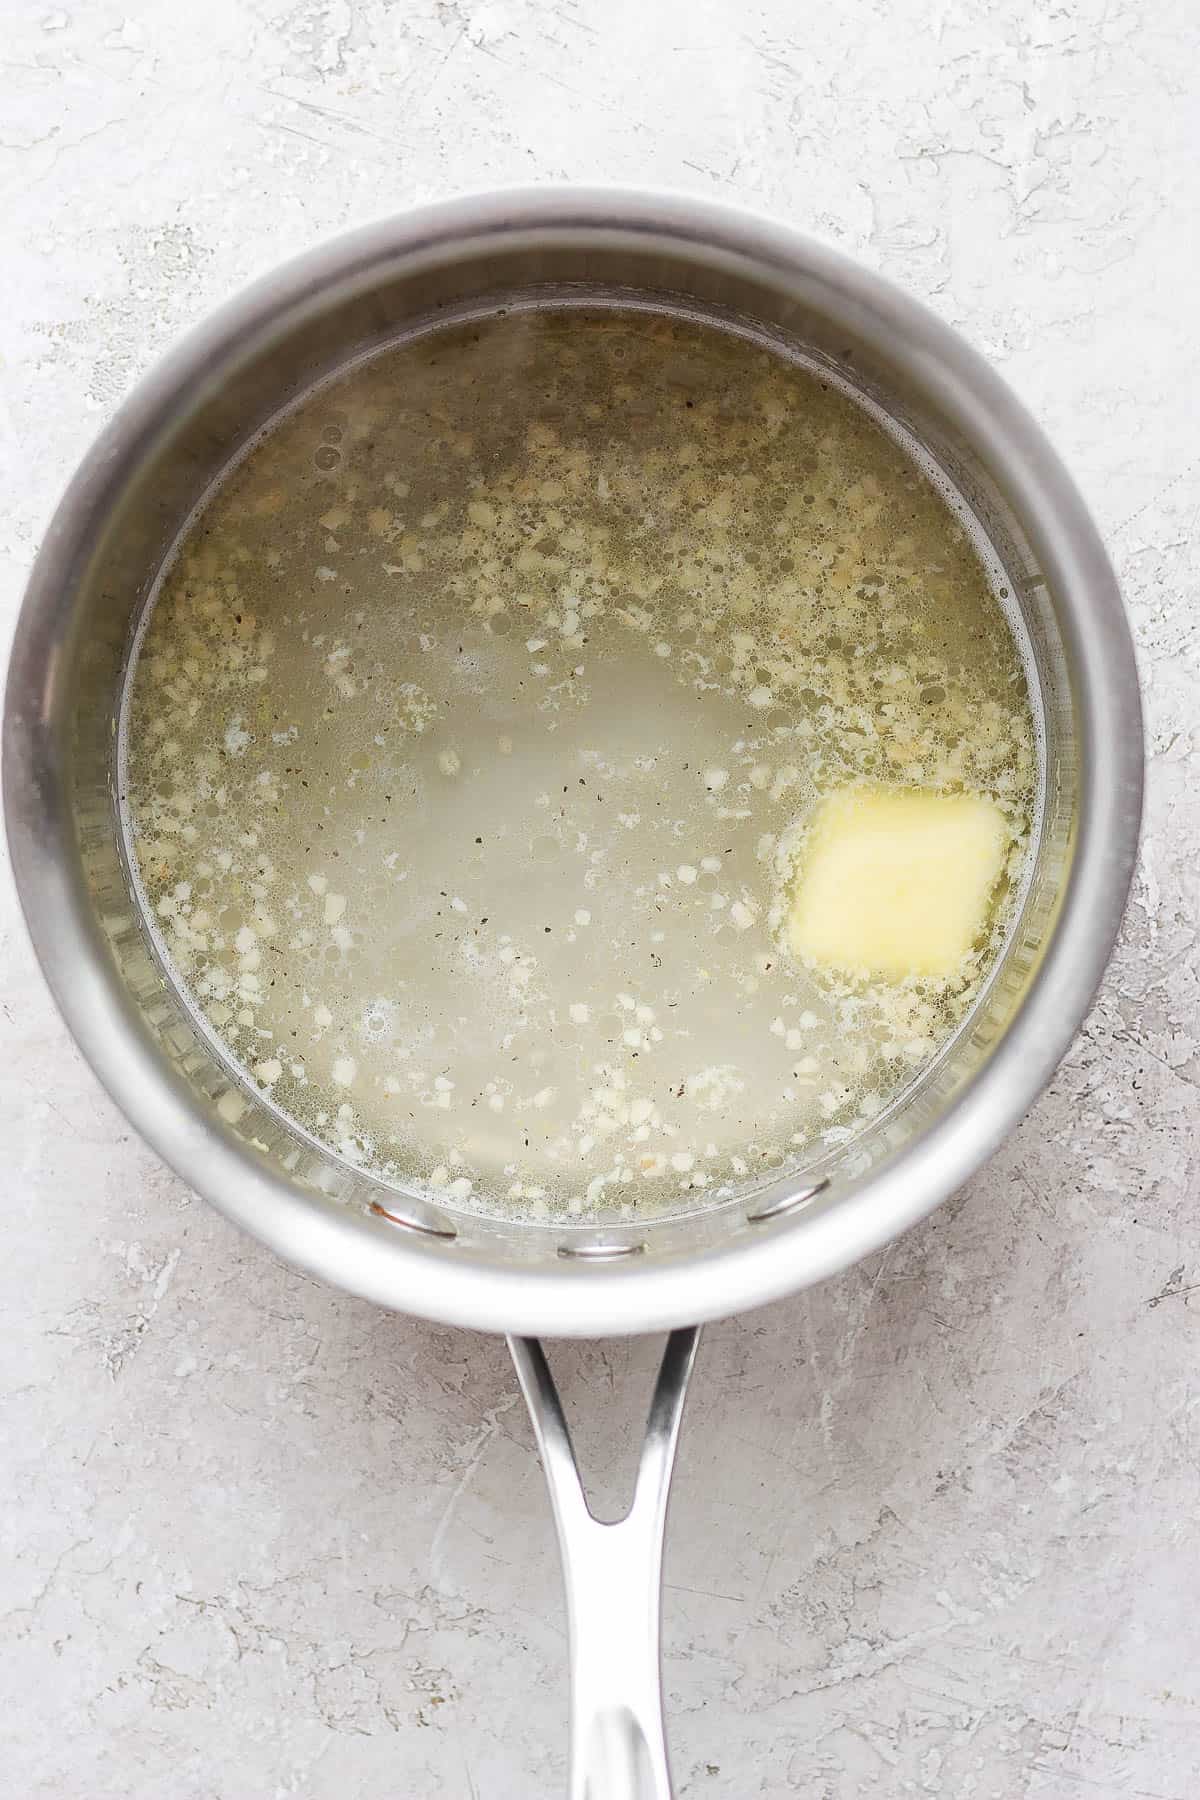 Water, butter, salt, pepper, and lemon zest added to the sauce pan.